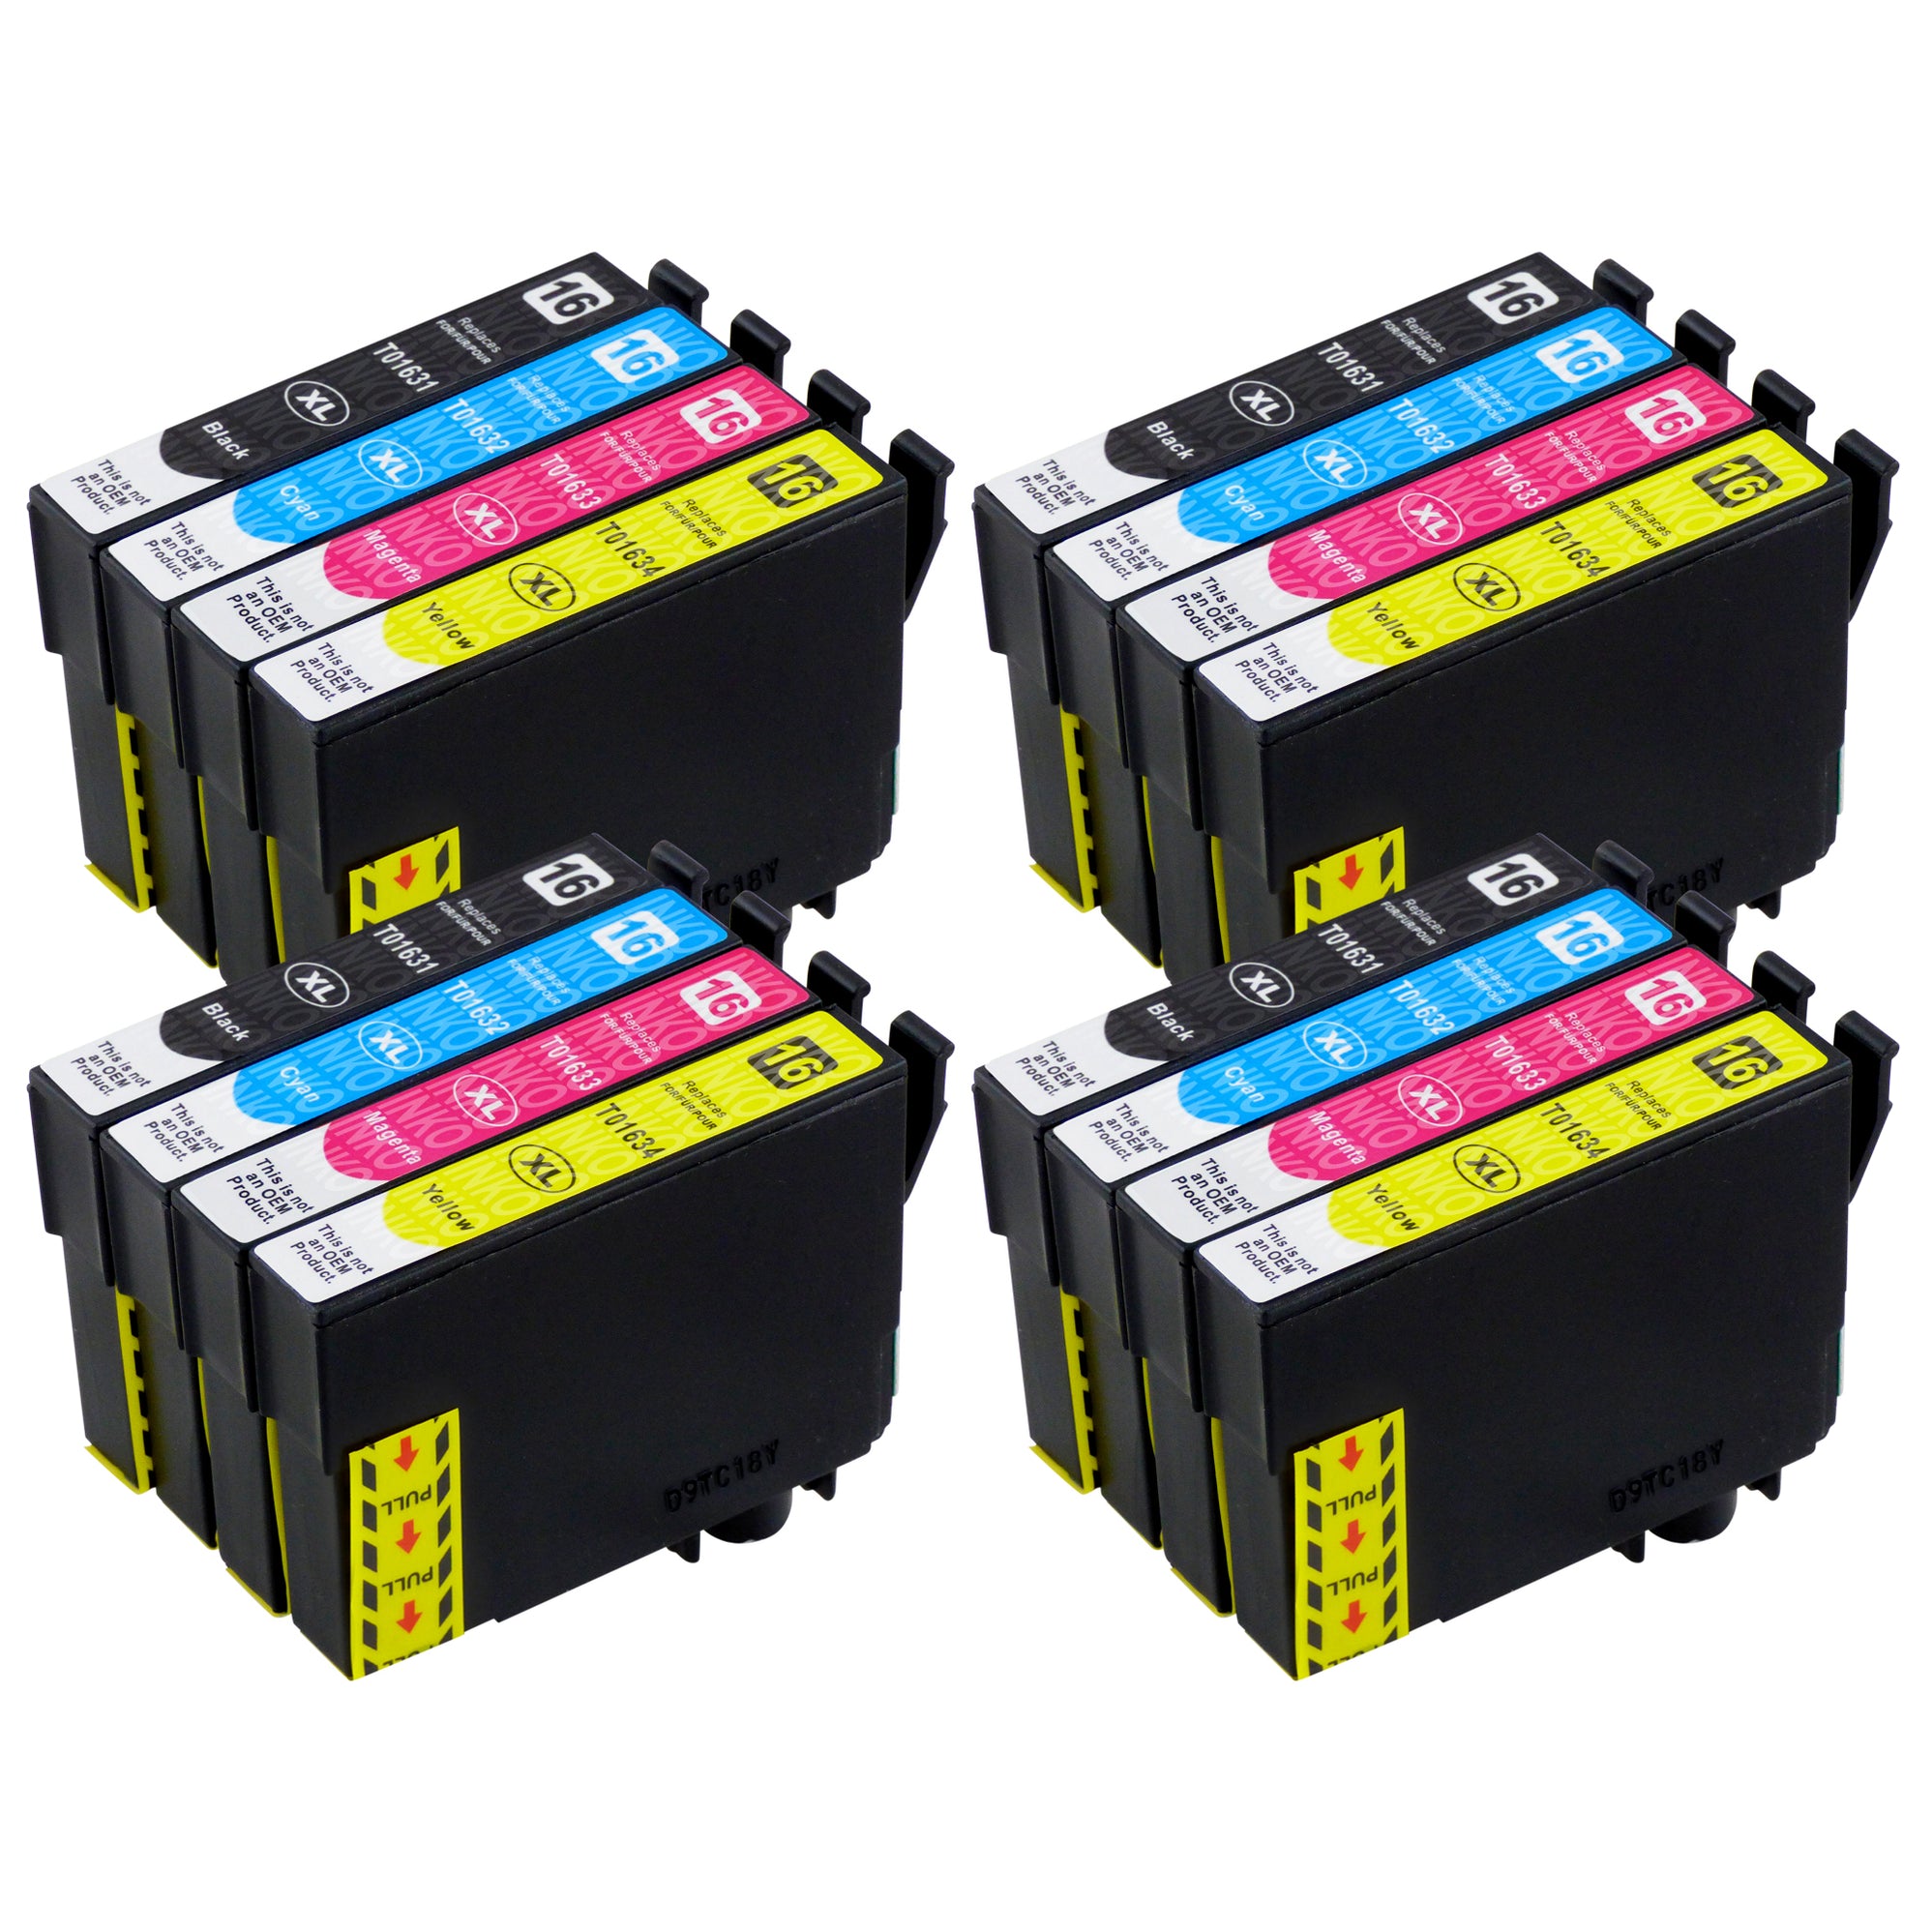 Epson Workforce Wf 2750 Ink Cartridges — Inko 9897